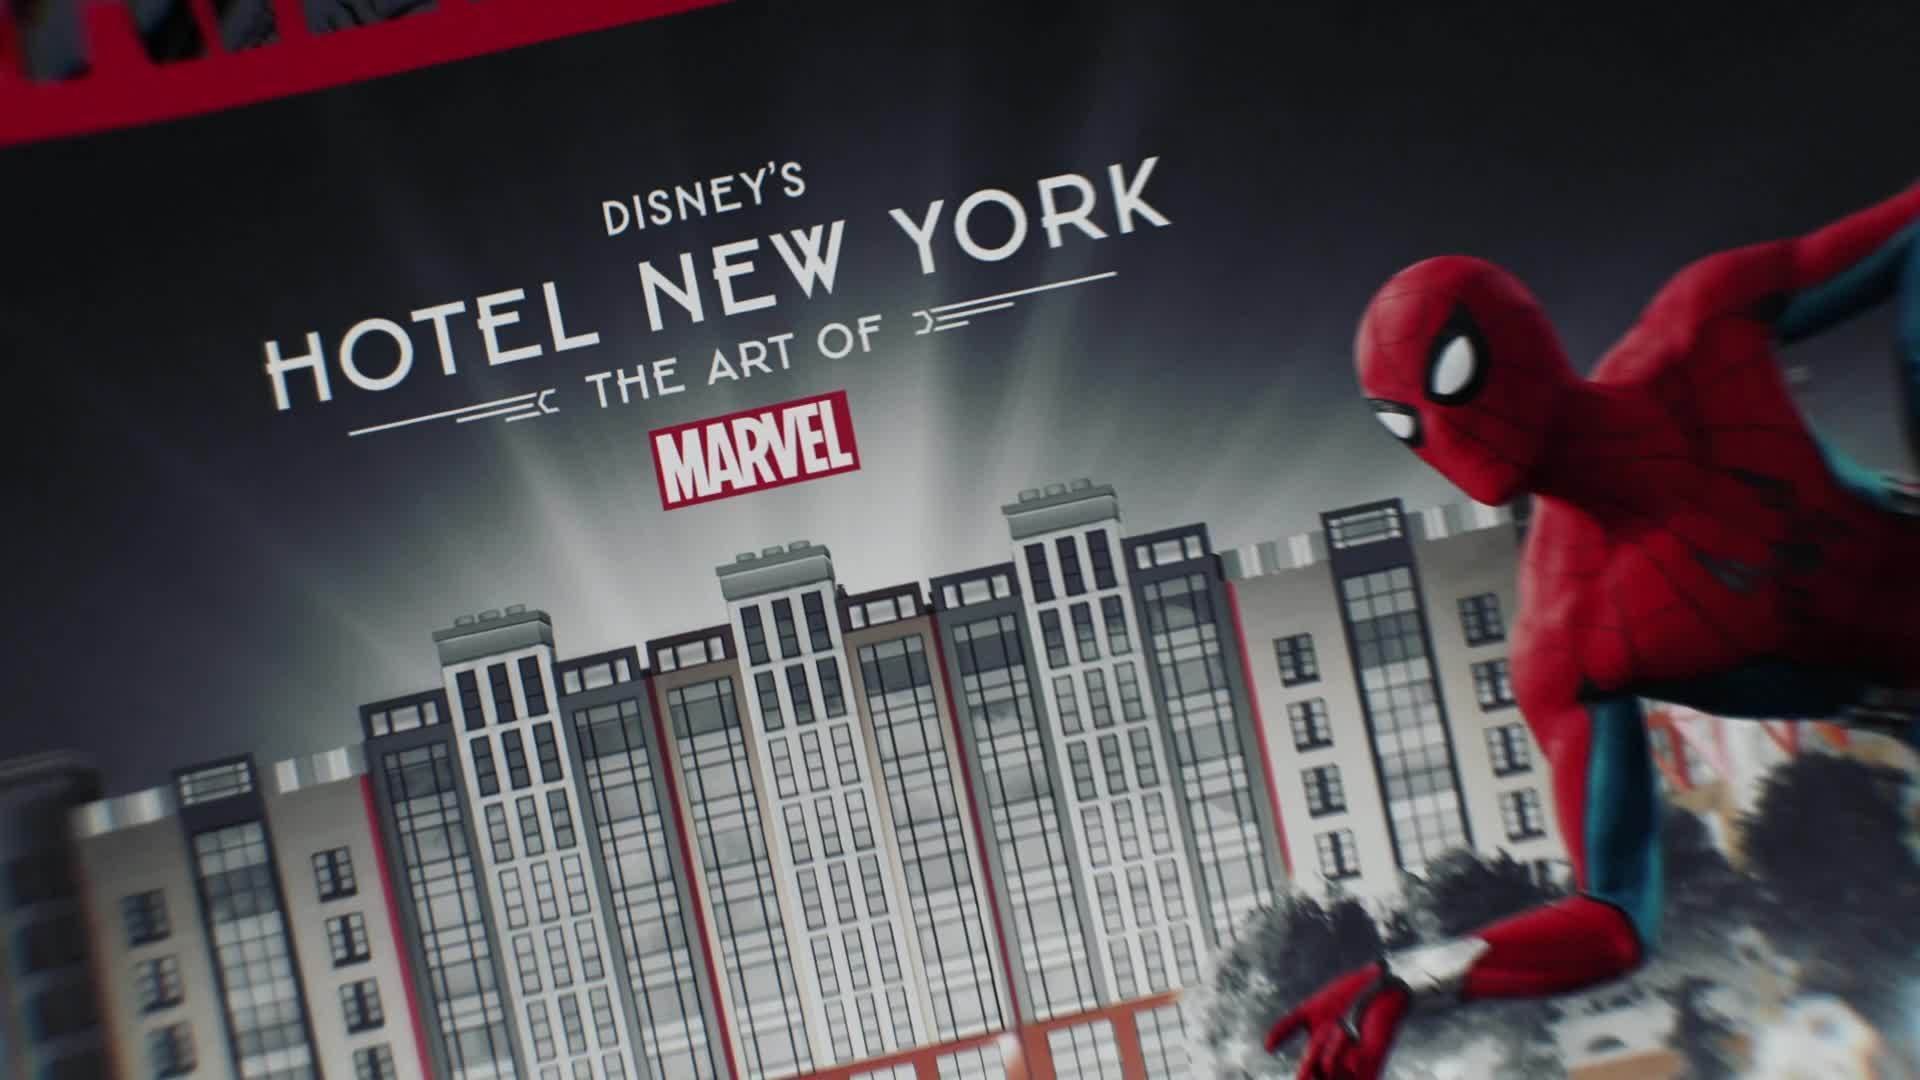 Disney's Hotel New York – The Art of Marvel is now open at Disneyland® Paris